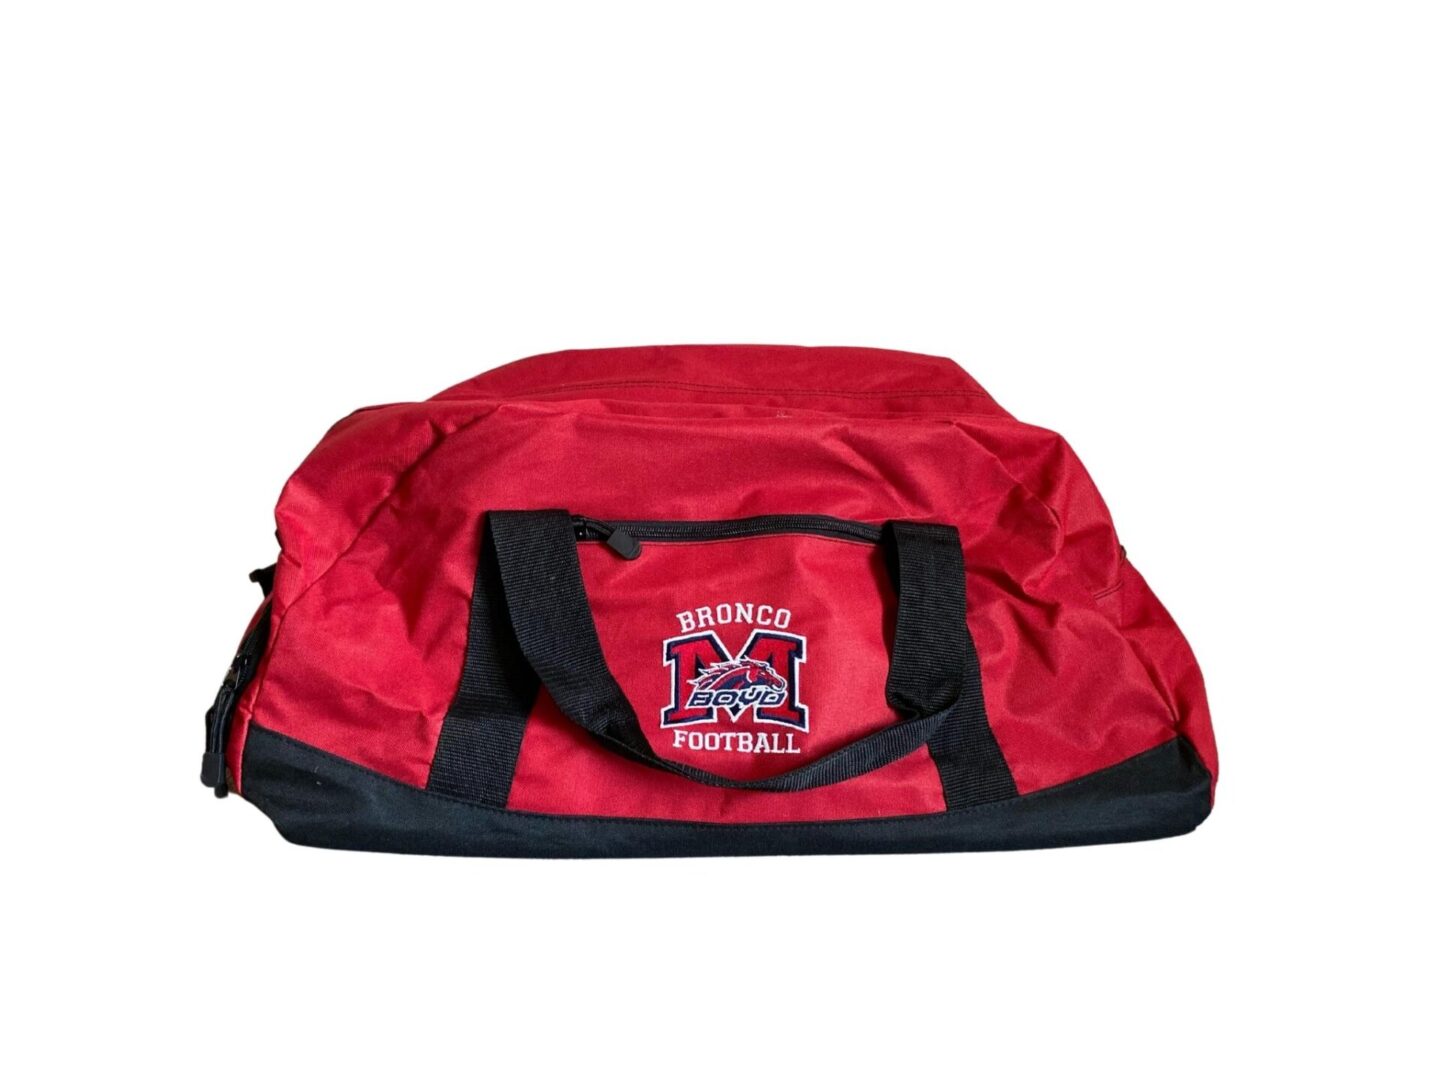 A red duffle bag with Boyd logo